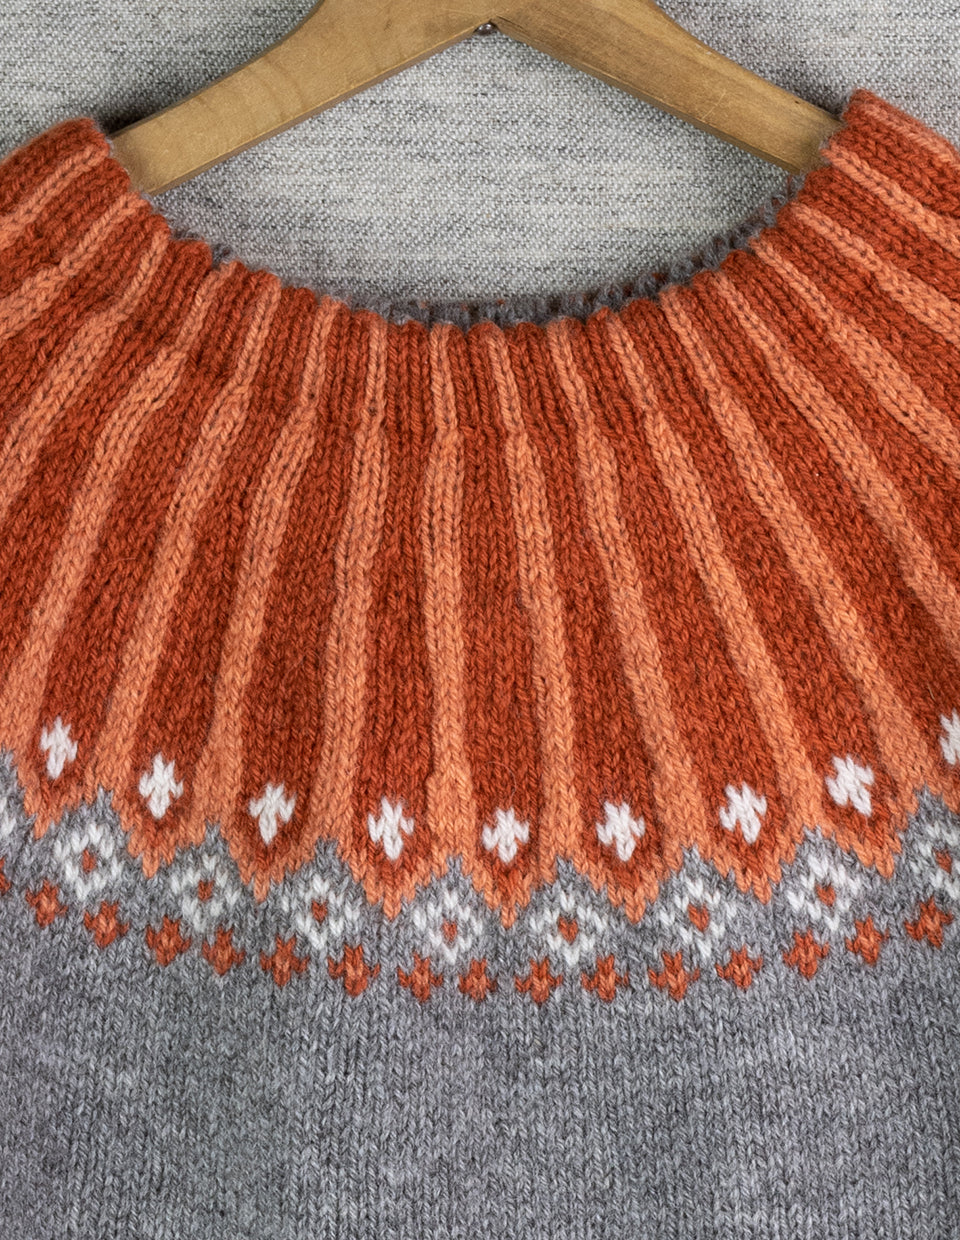 Turid, 3 ply grey sweater knitting kit